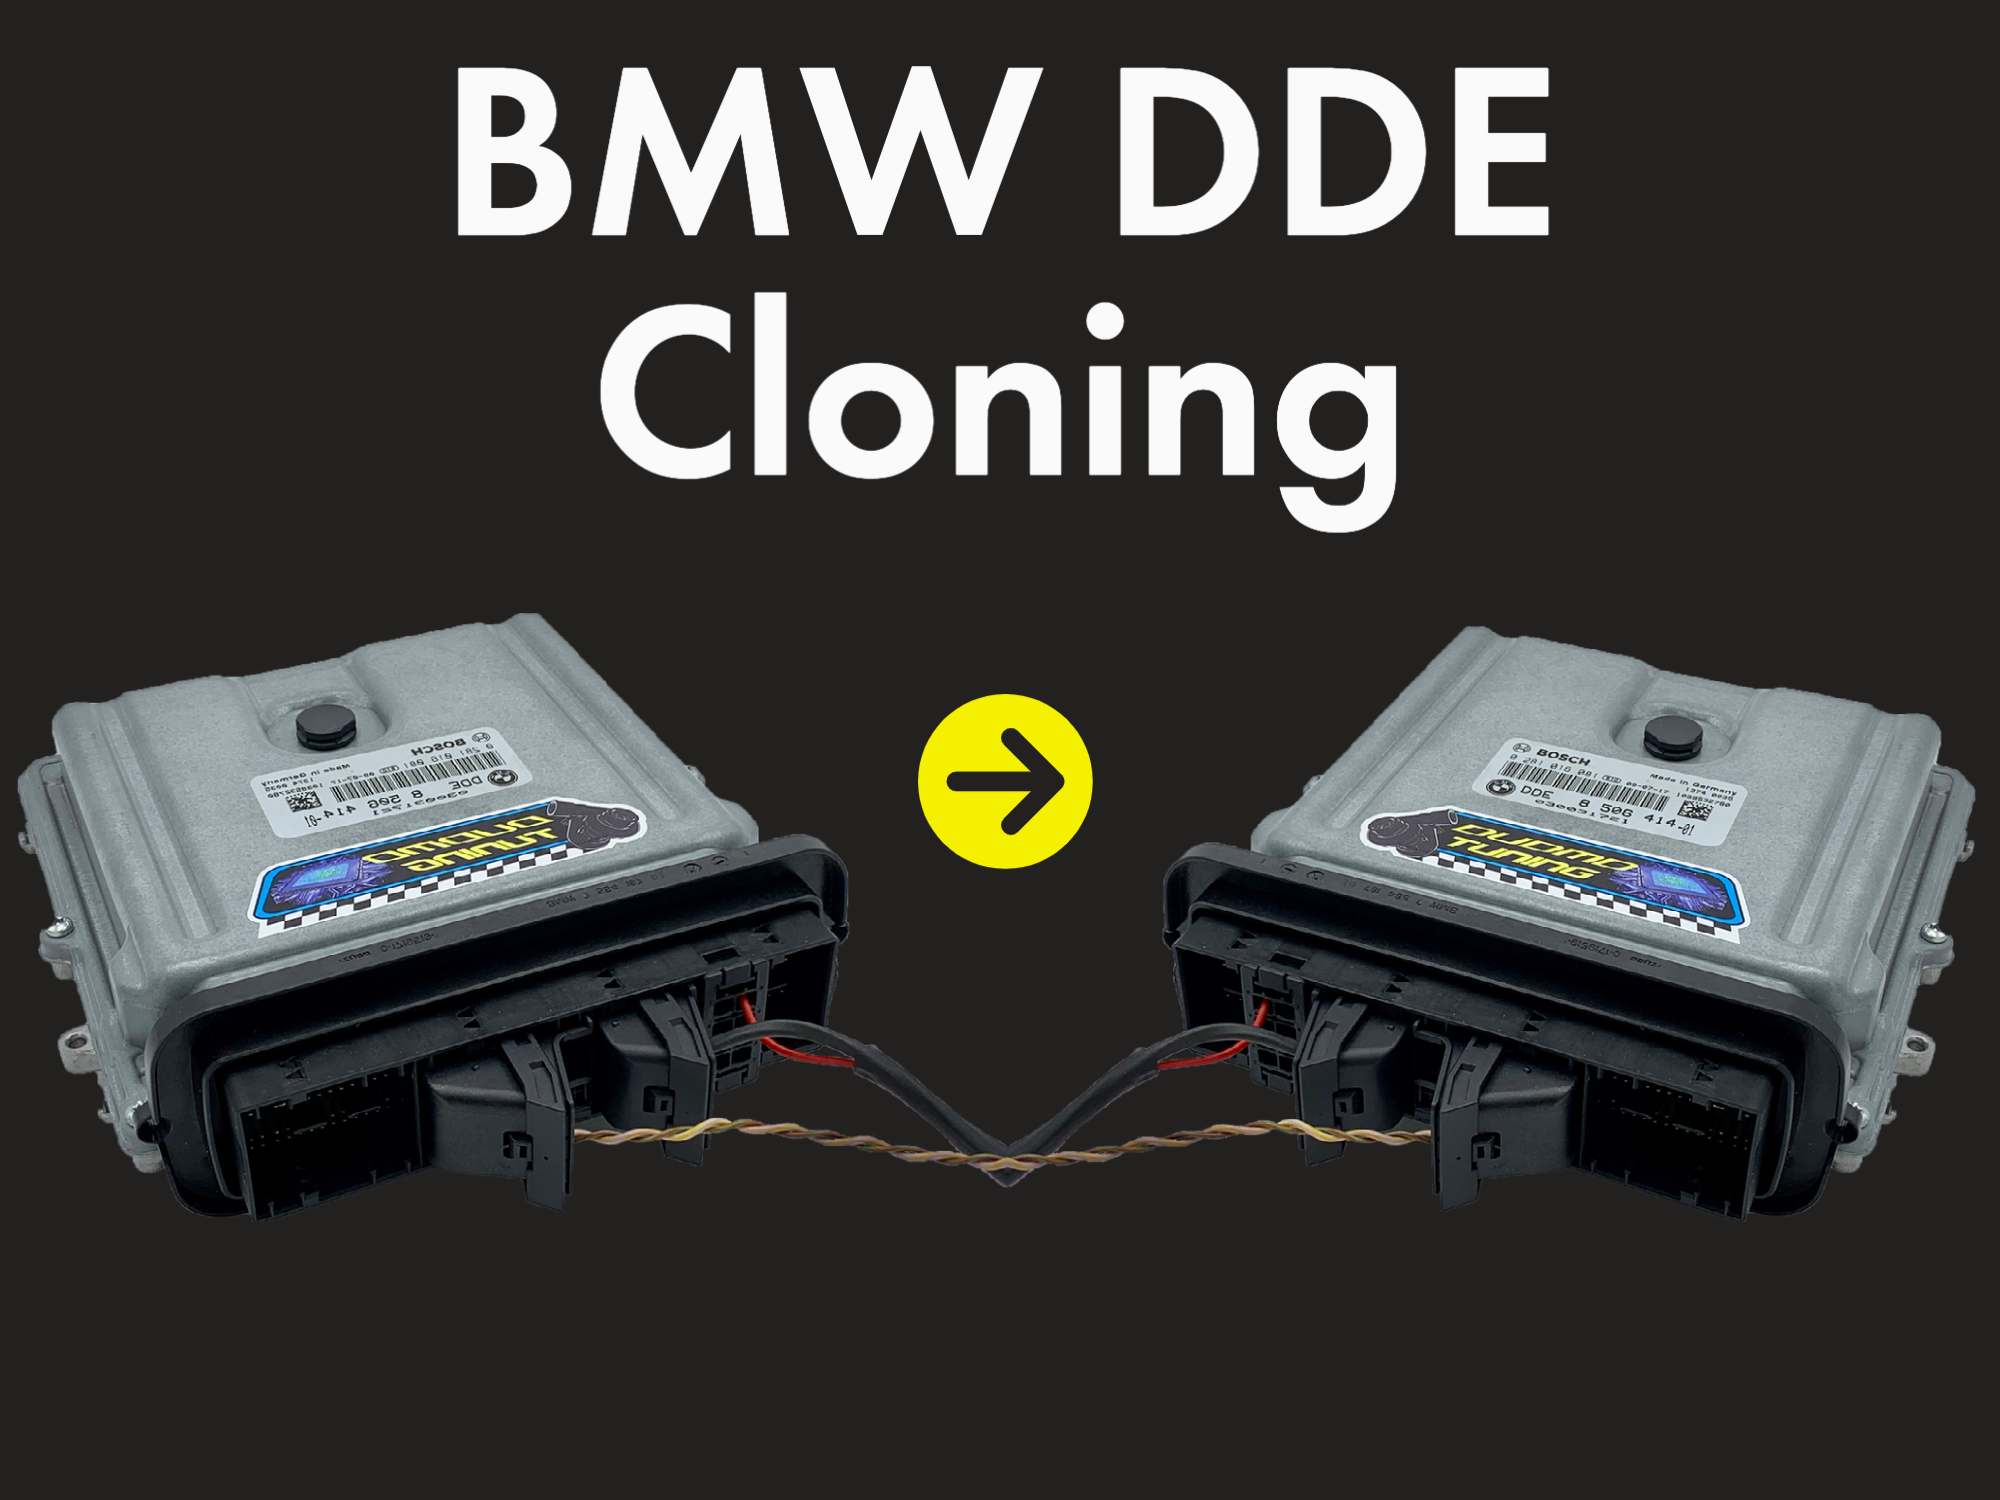 BMW M57 Diesel - E9X 335d, E70 X5 35d - Bimmworks Remote Tuning